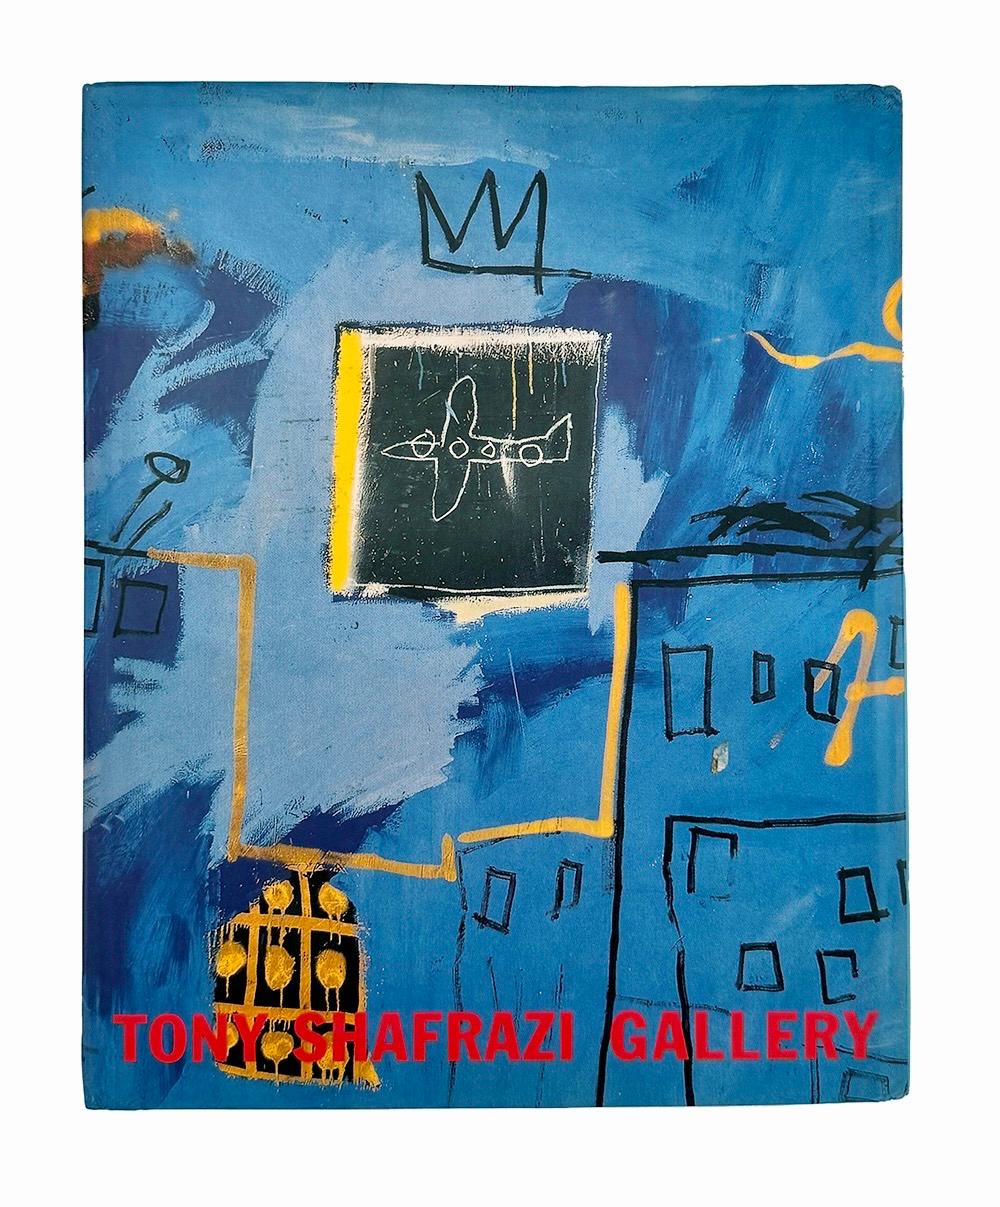 Basquiat Tony Shafrazi Gallery 1999 monograph  - Pop Art Art by Jean-Michel Basquiat